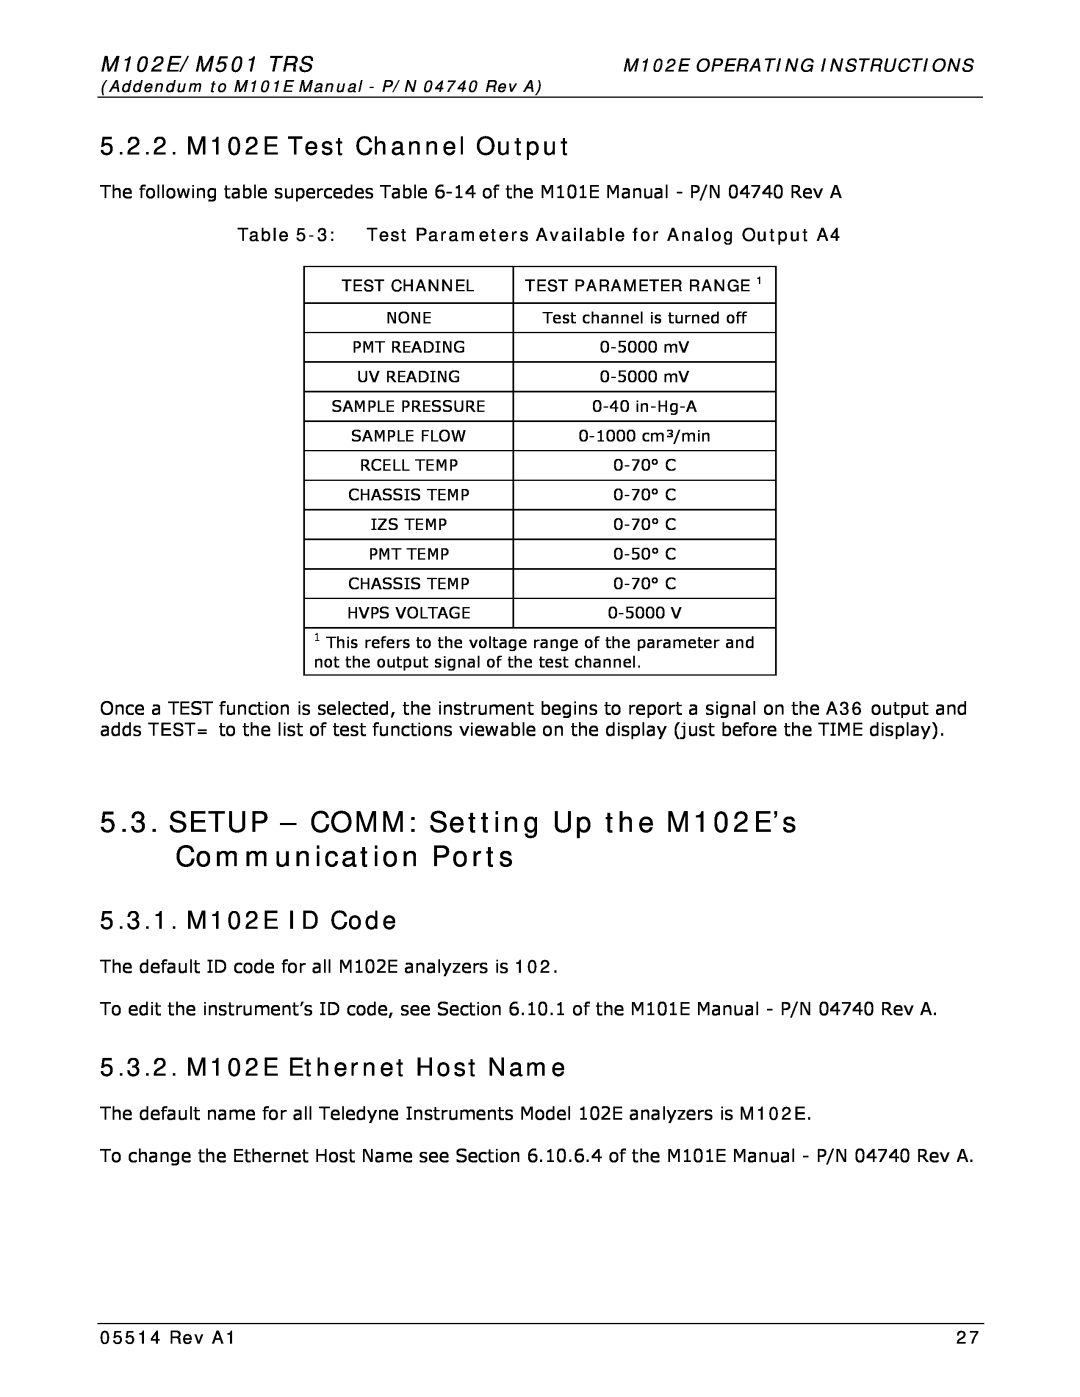 Teledyne SETUP - COMM Setting Up the M102E’s Communication Ports, 5.2.2. M102E Test Channel Output, M102E/M501 TRS 